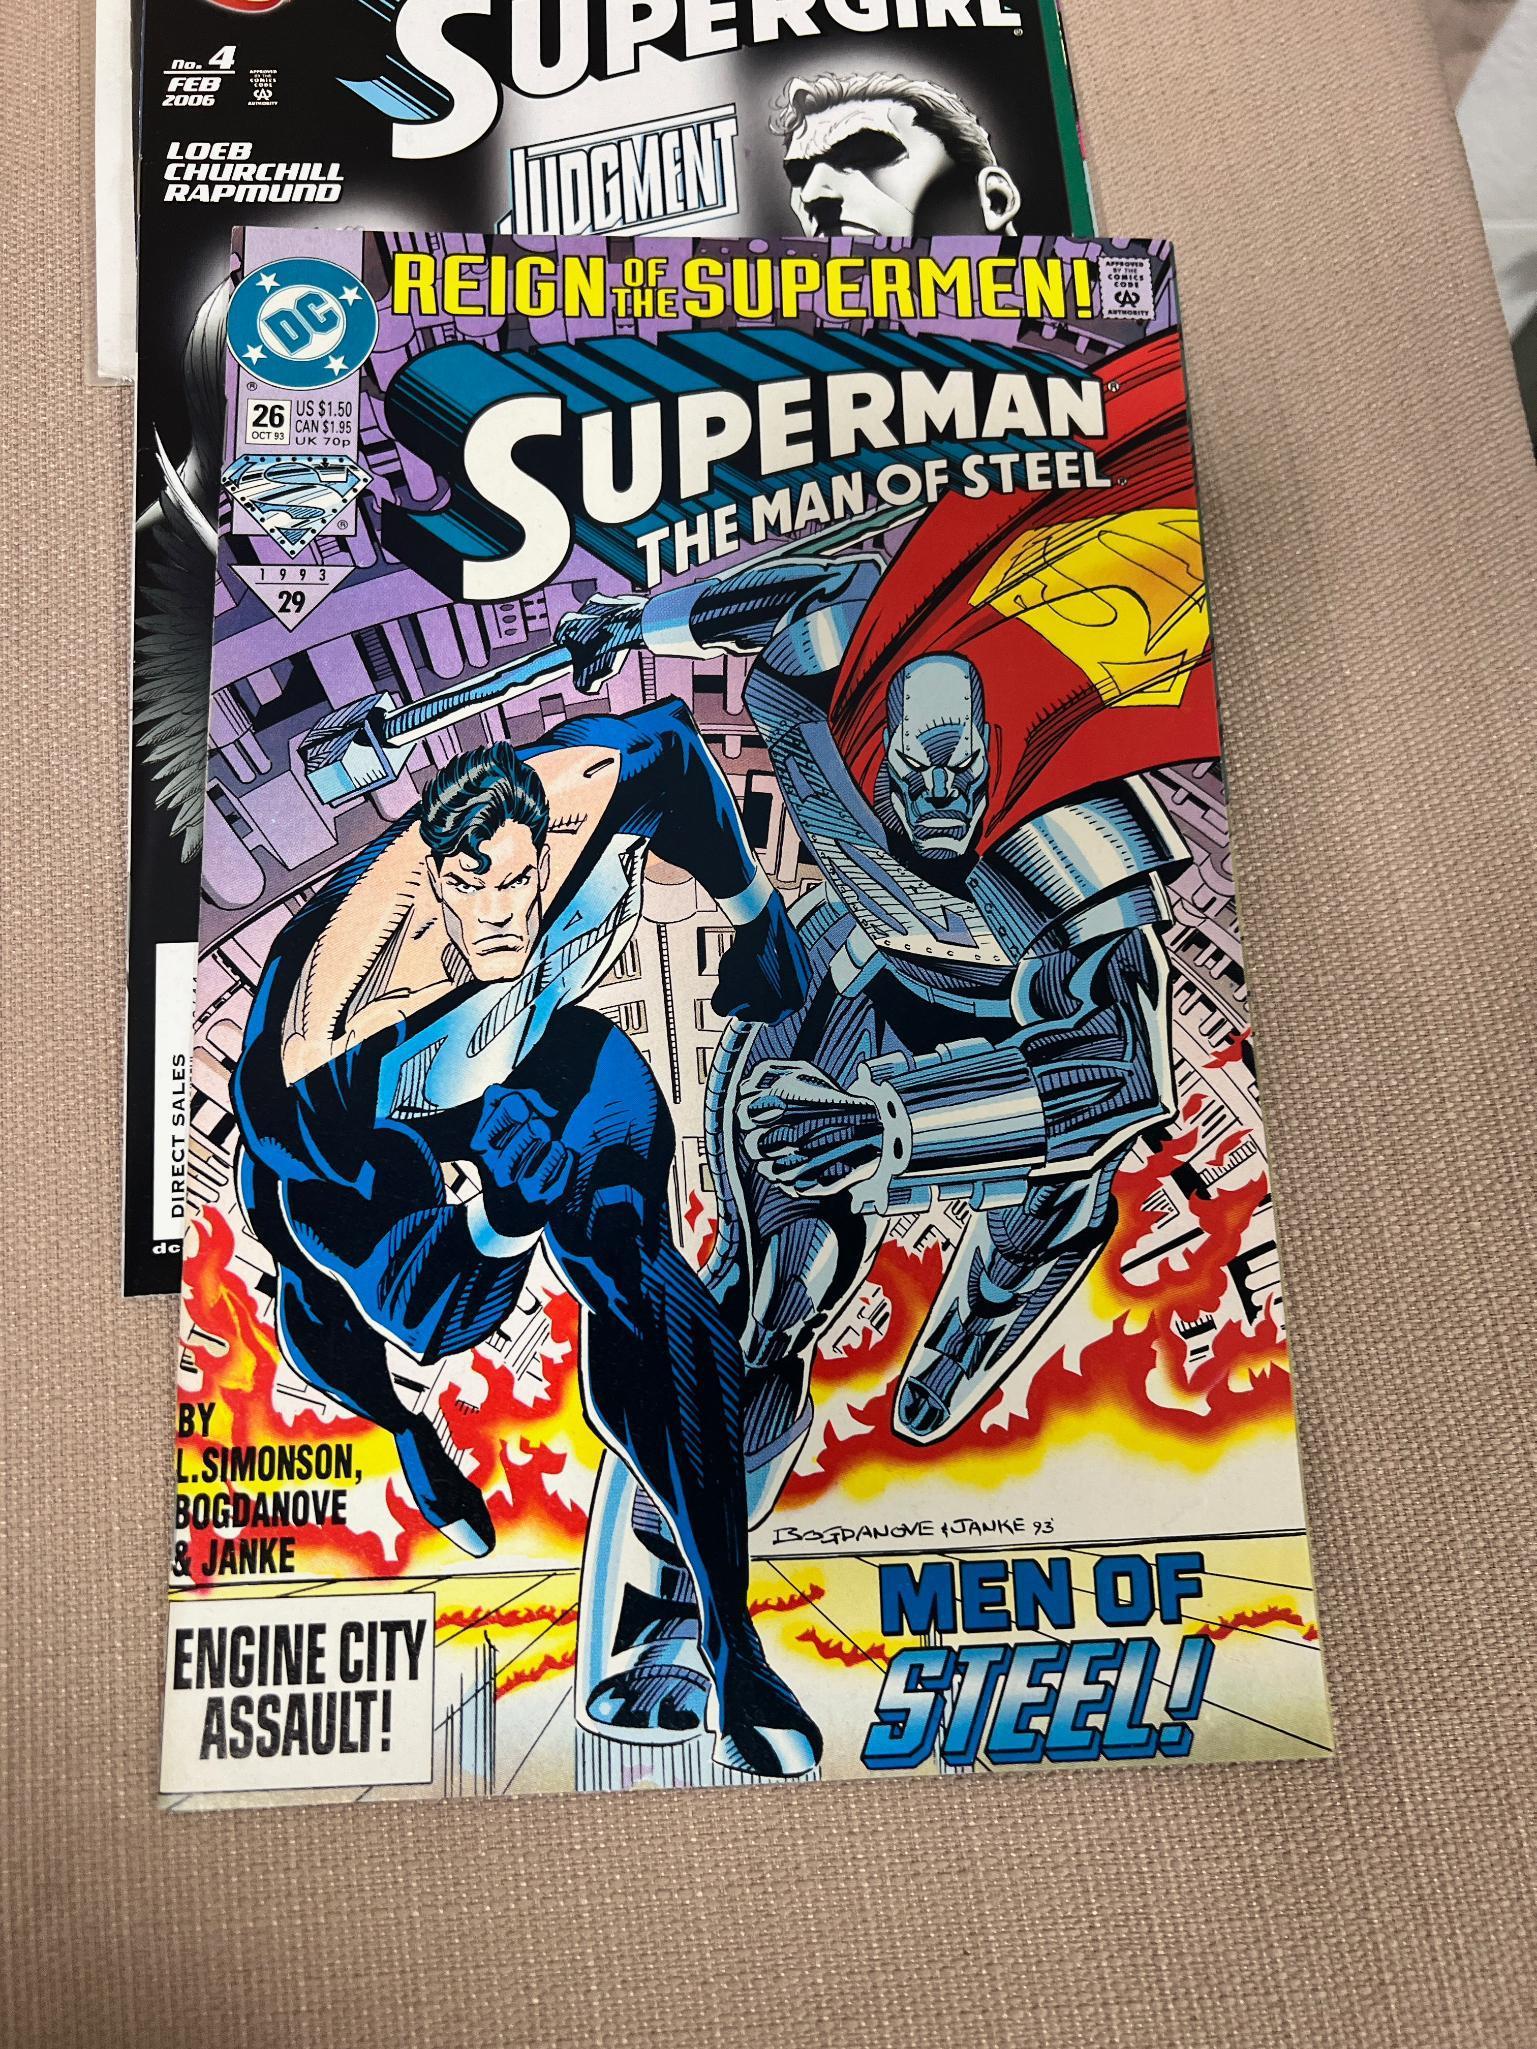 20+ Superman and related DC comics, plus a Batman Comic